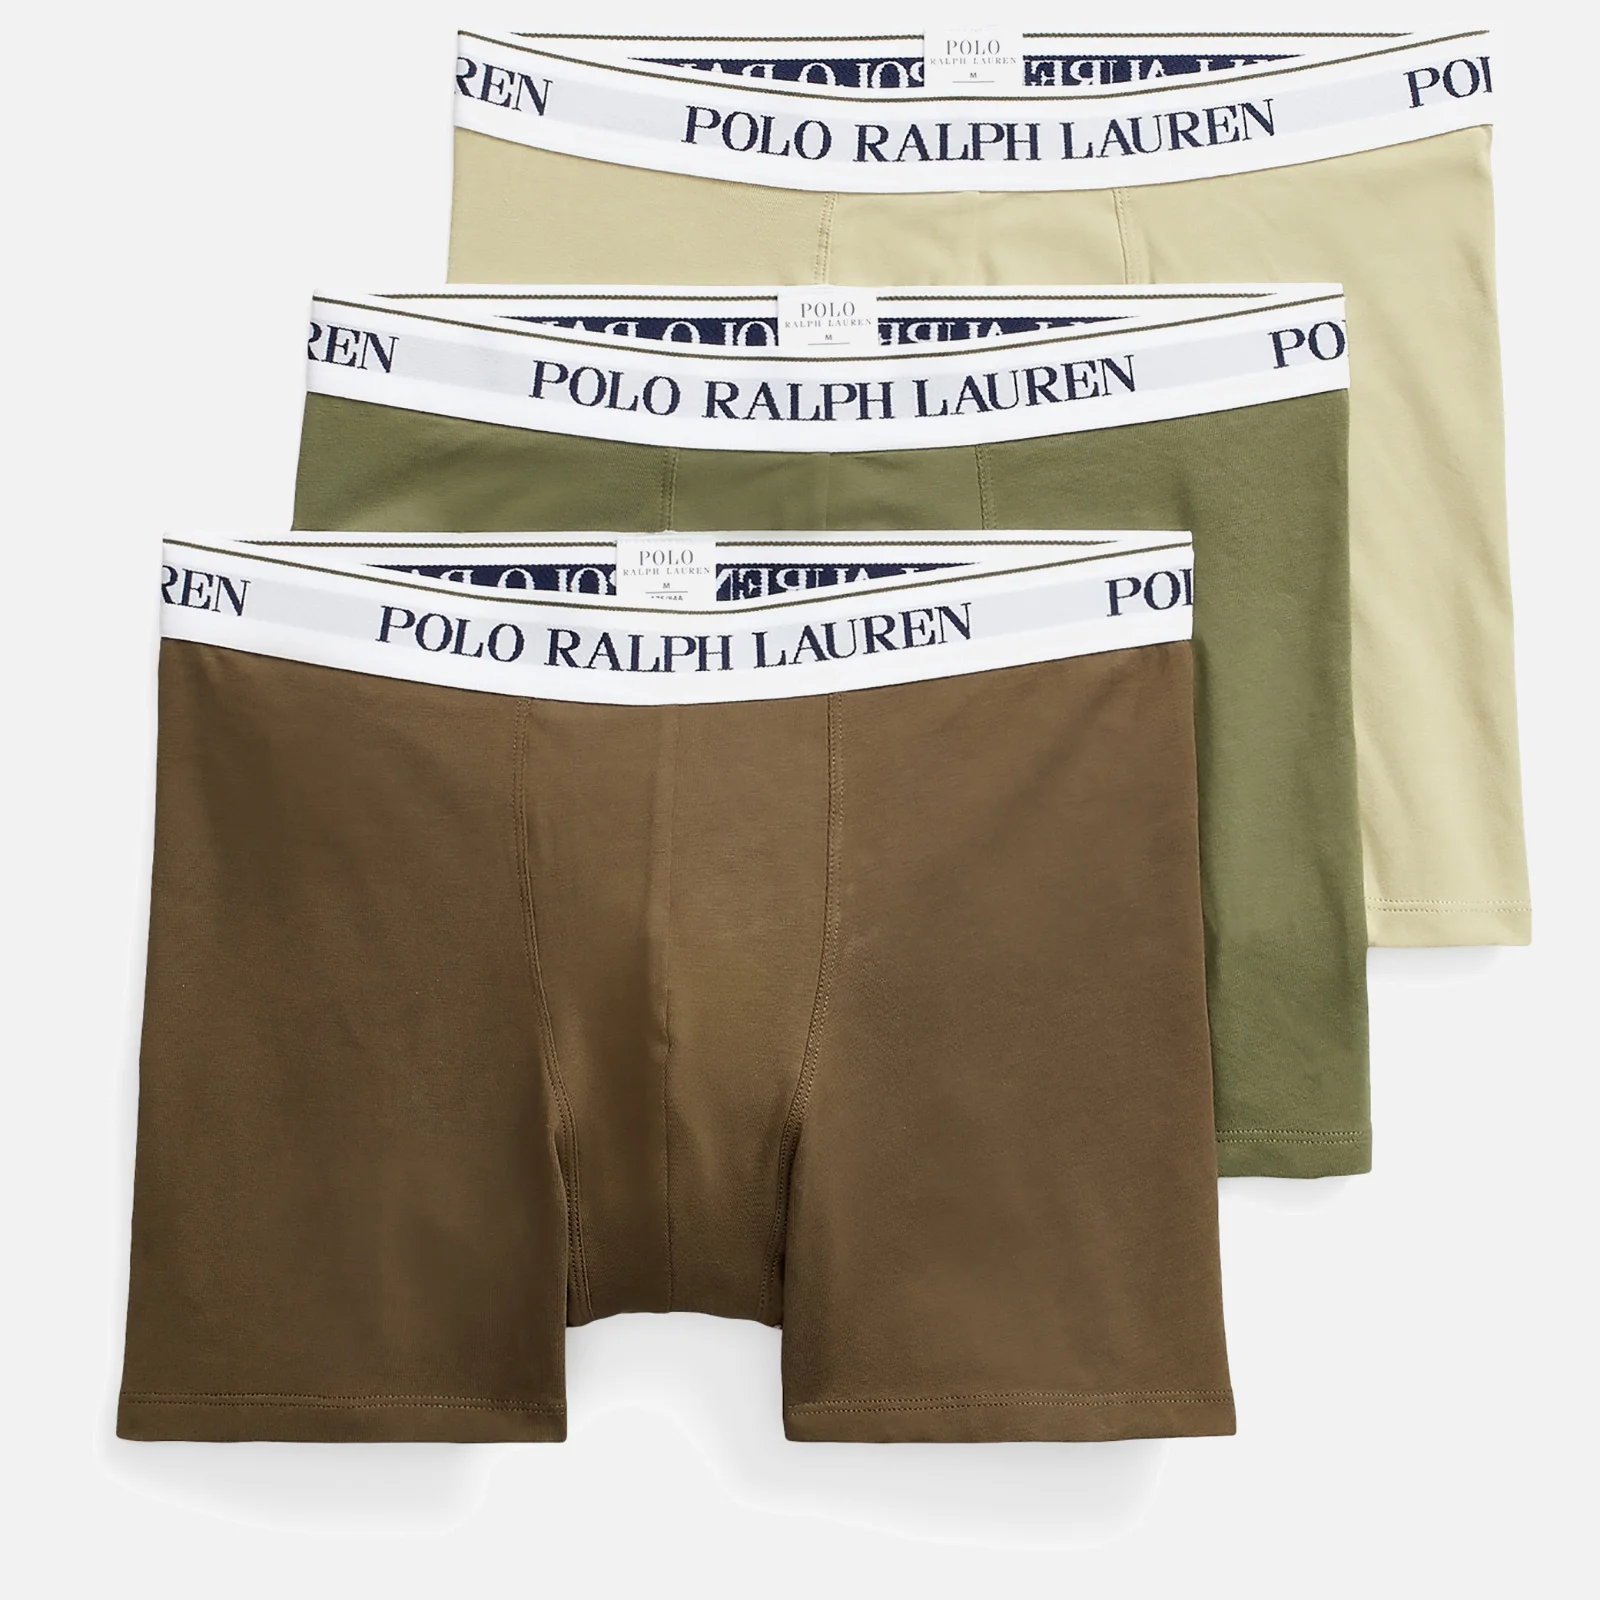 Polo Ralph Lauren Men's 3-Pack Boxer Briefs - Light Olive/Army Olive/Defender Green Image 1